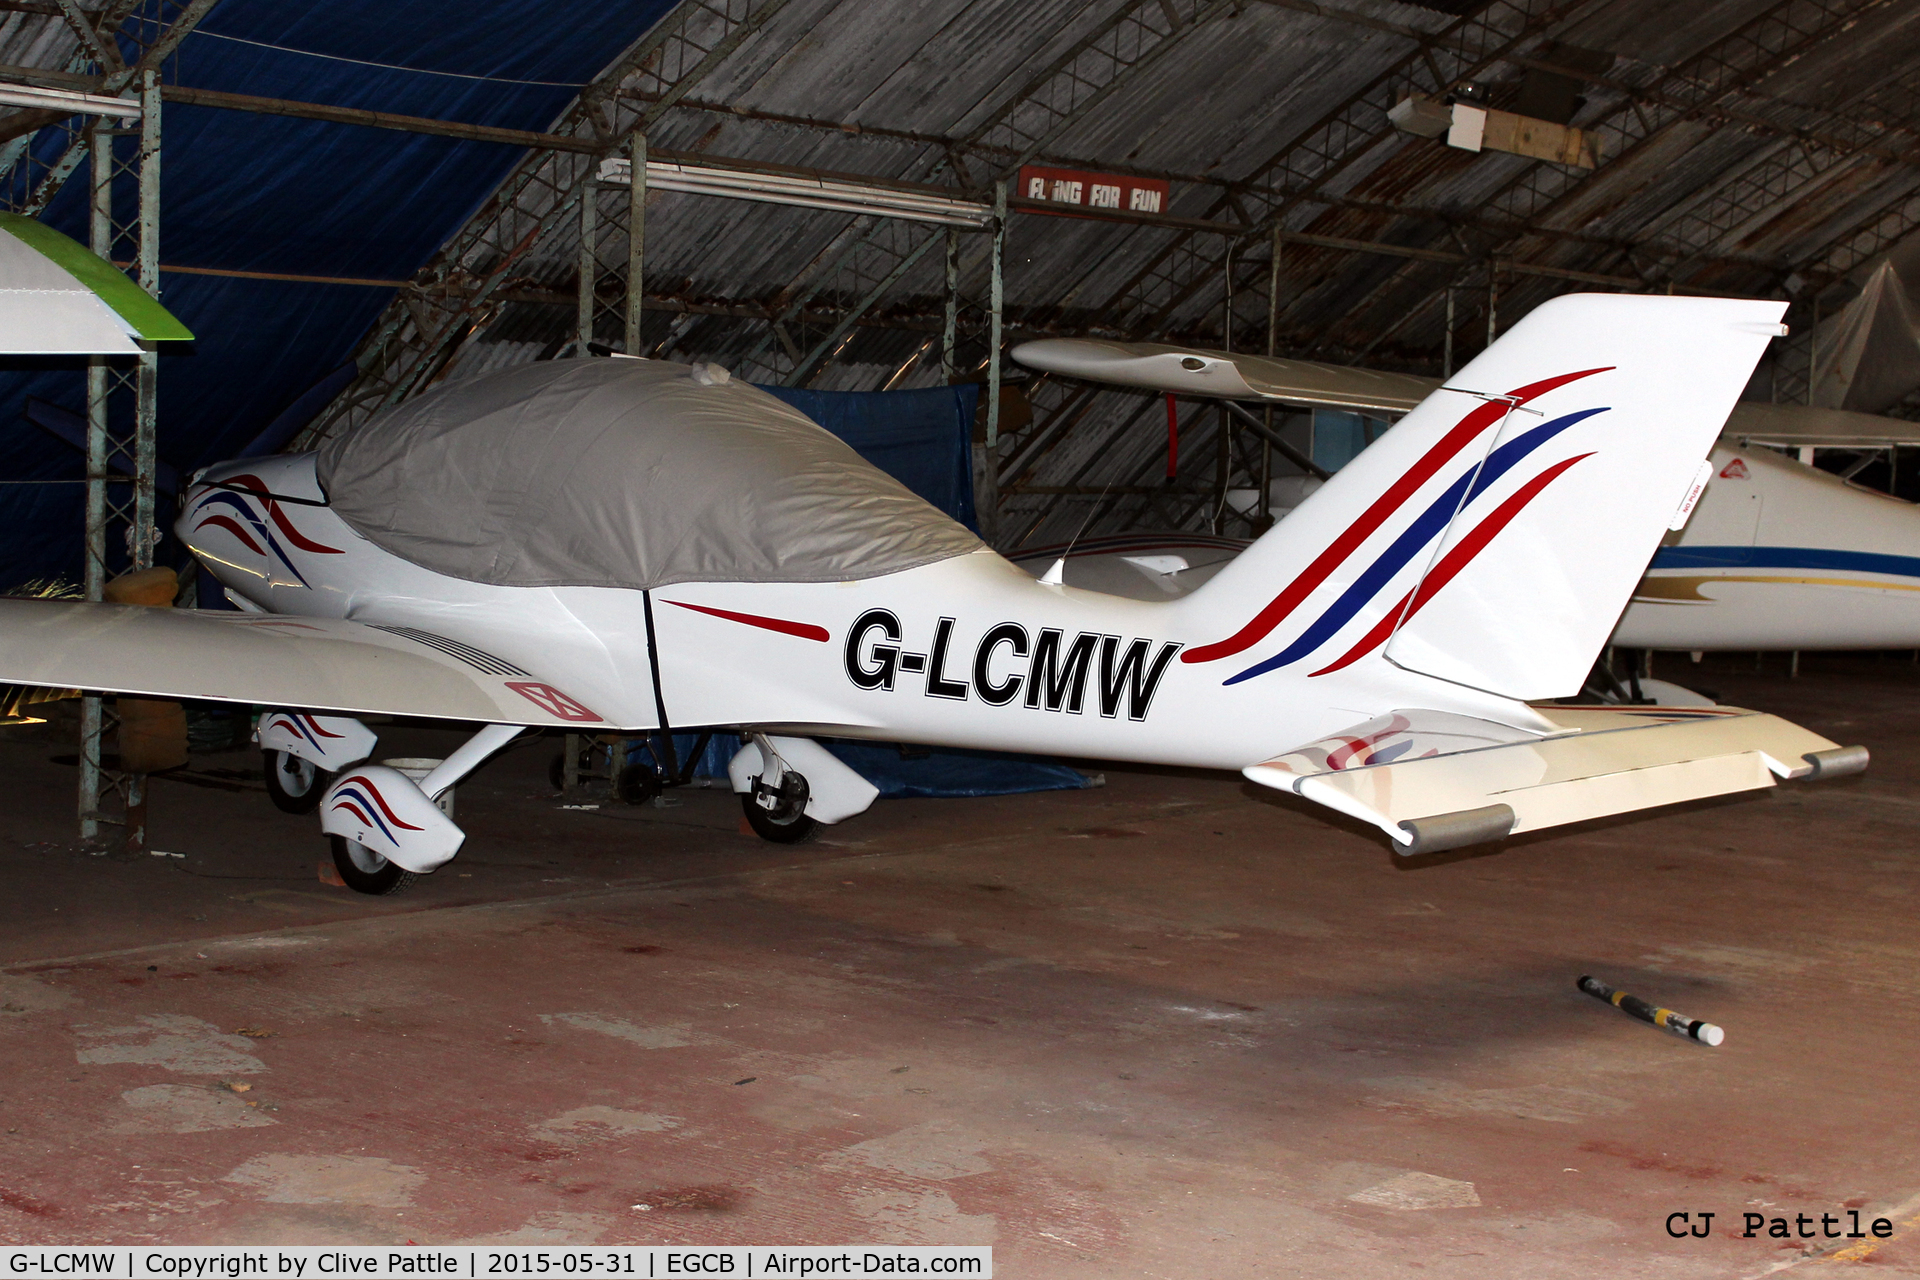 G-LCMW, 2010 TL Ultralight TL-2000UK Sting Carbon C/N LAA 347-14787, Hangared at Barton Airfield, Manchester - EGCB